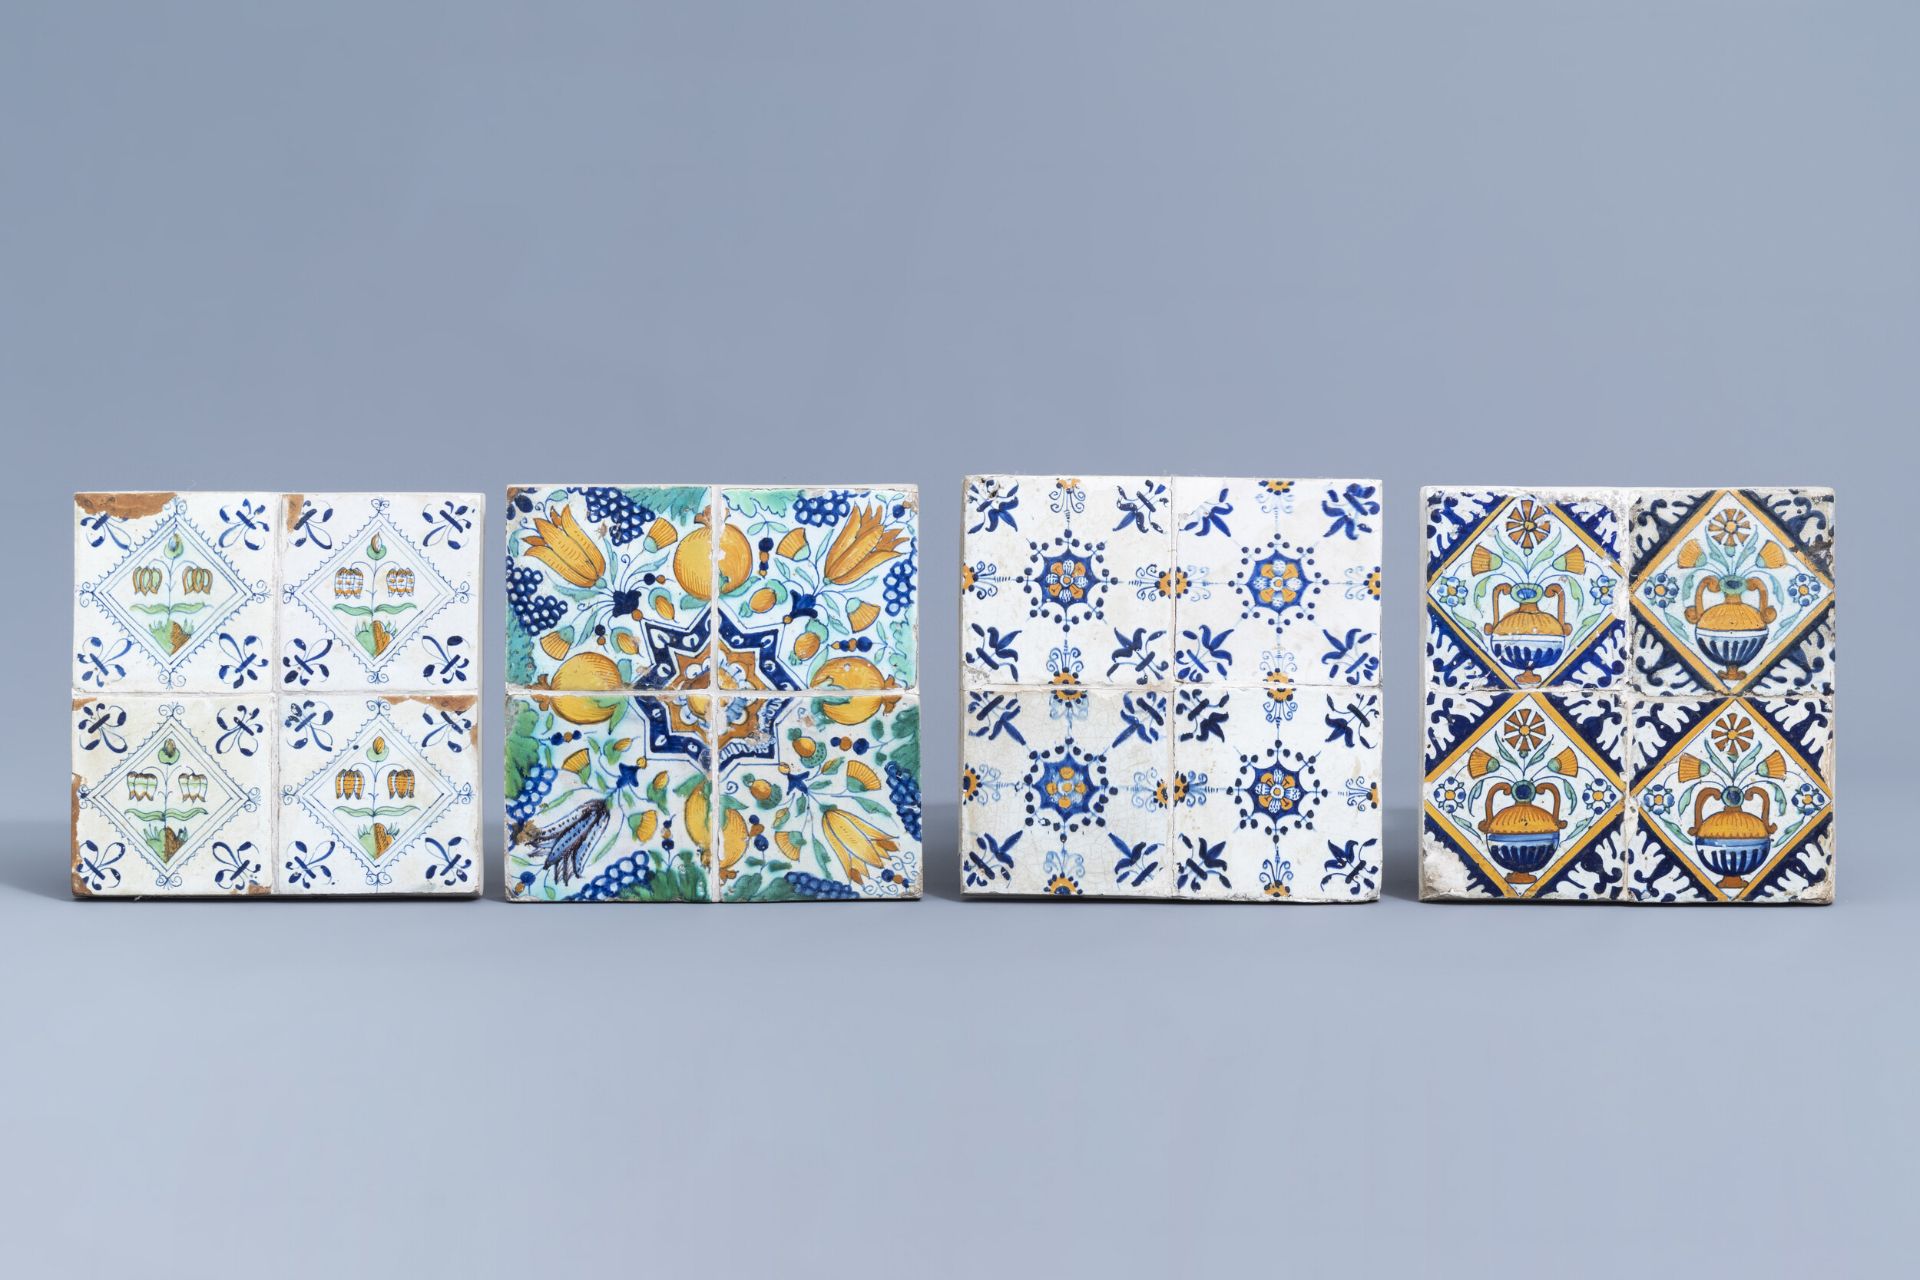 Sixteen Dutch Delft polychrome tiles with floral design, 17th C.